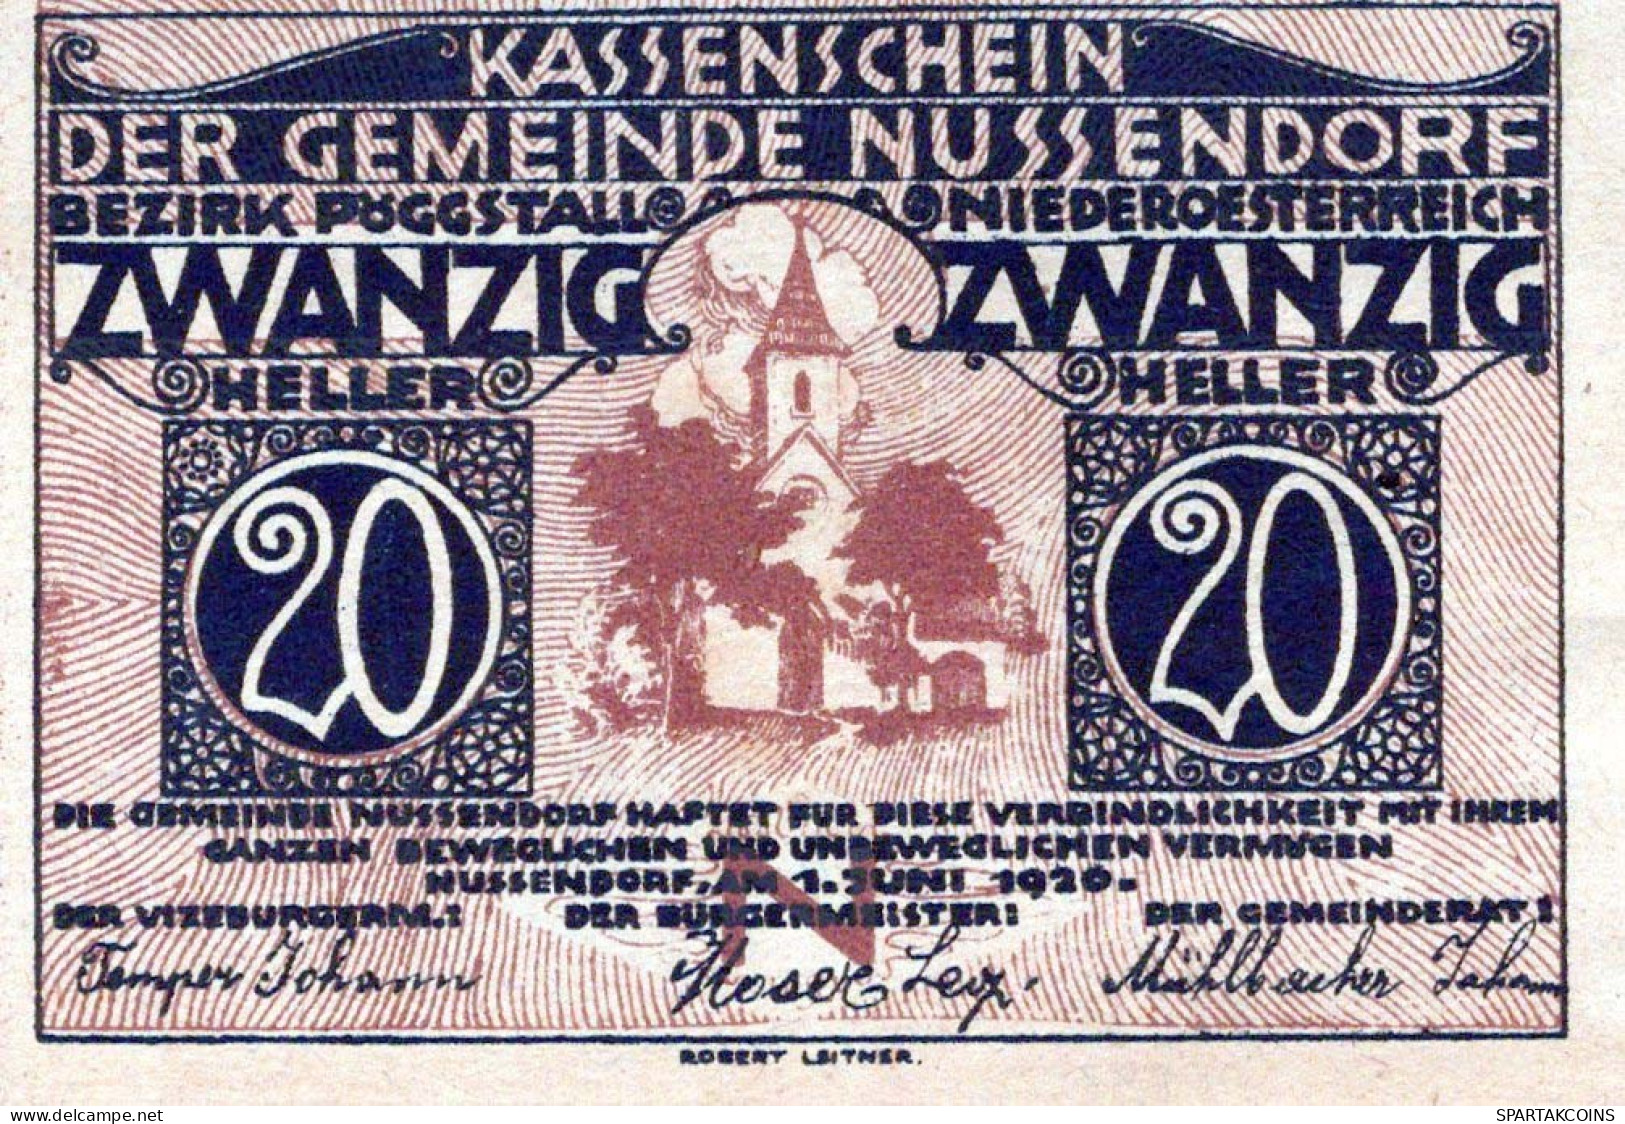 20 HELLER 1920 Stadt NUSSENDORF-ARTSTETTEN Niedrigeren Österreich #PE432 - [11] Local Banknote Issues